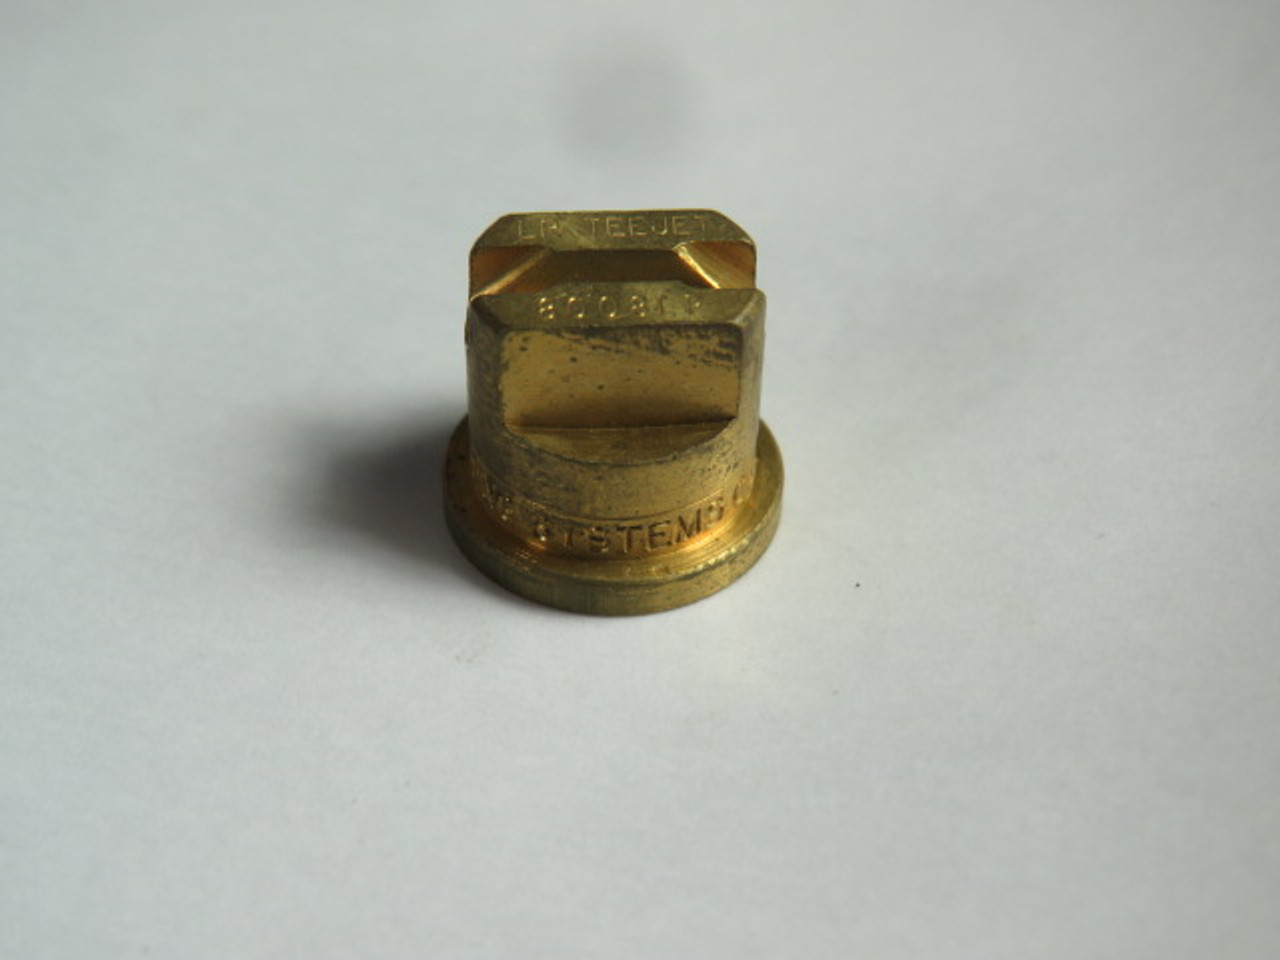 Teejet 8008LP Brass Nozzle USED